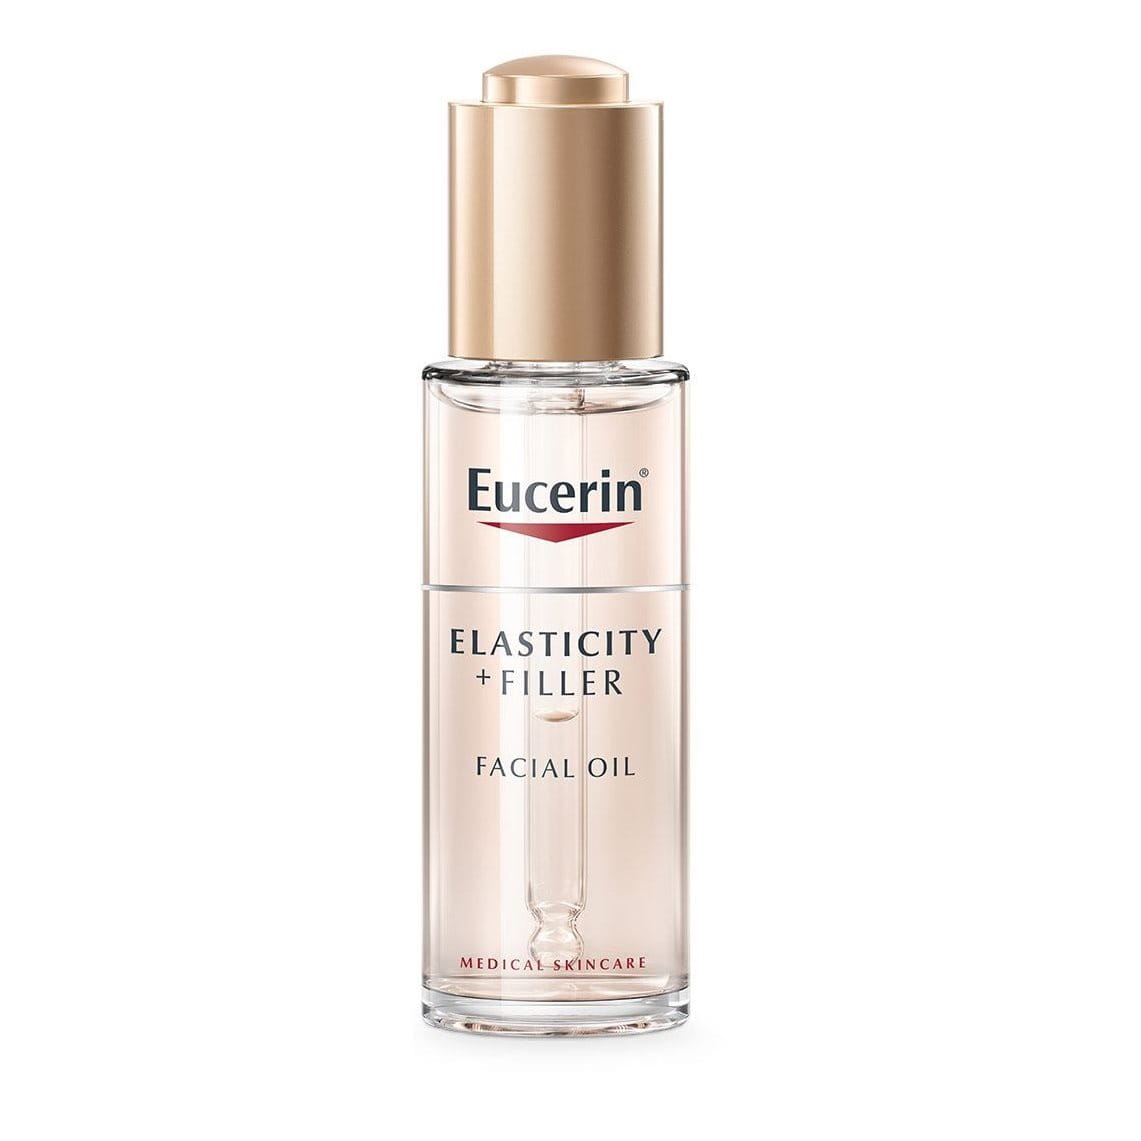 Eucerin Elasticity + Filler Facial Oil